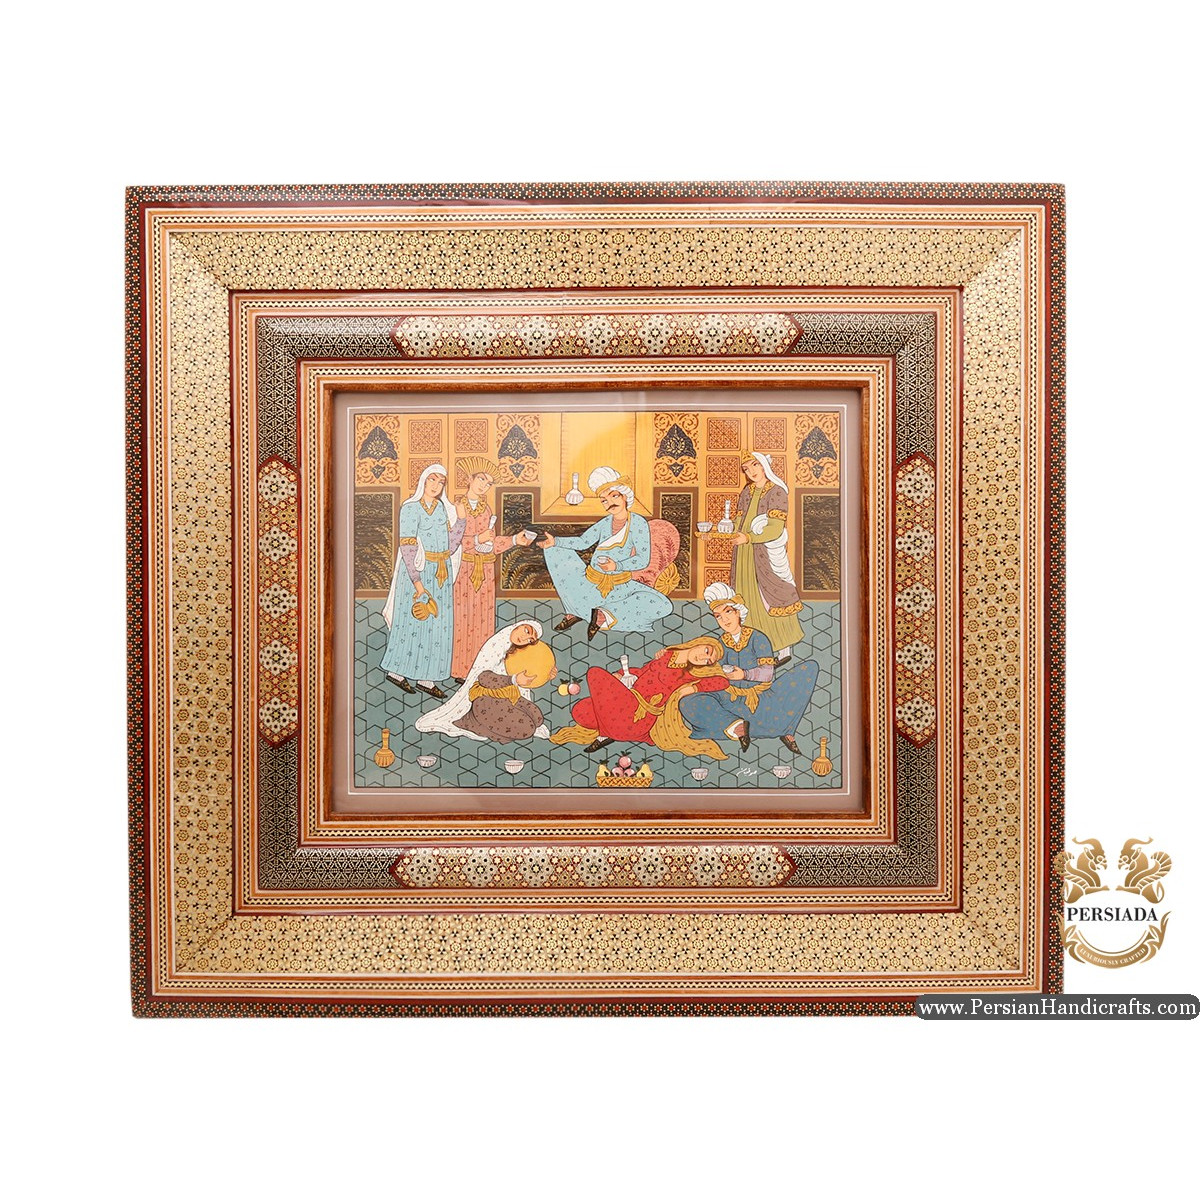 Decorative Painting Khatam Frame | Hand Painting Miniature | HM6102-Persian Handicrafts